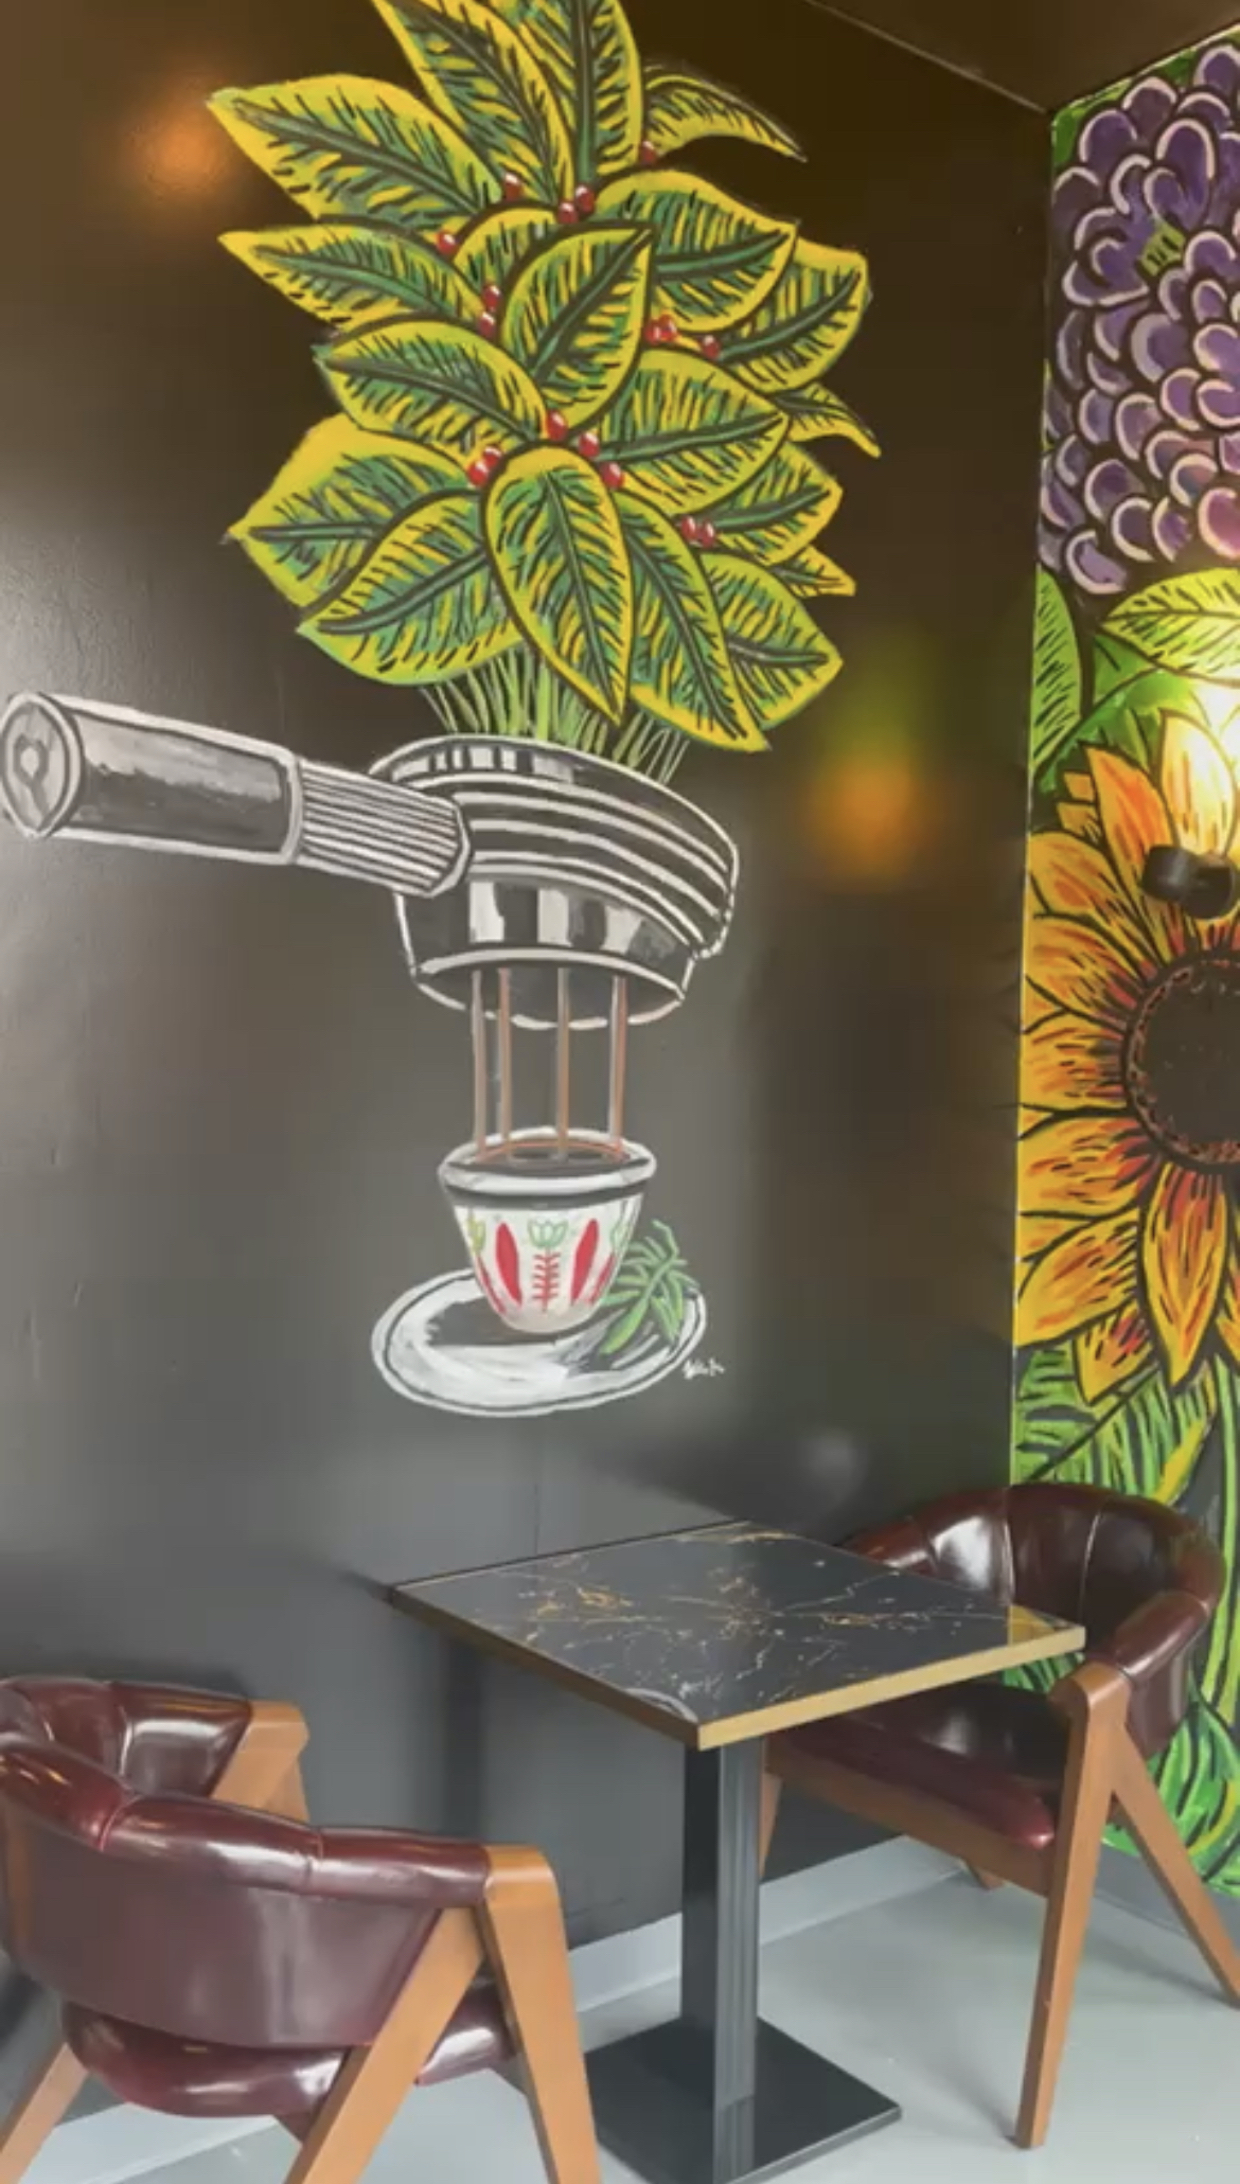 Adees coffee mural